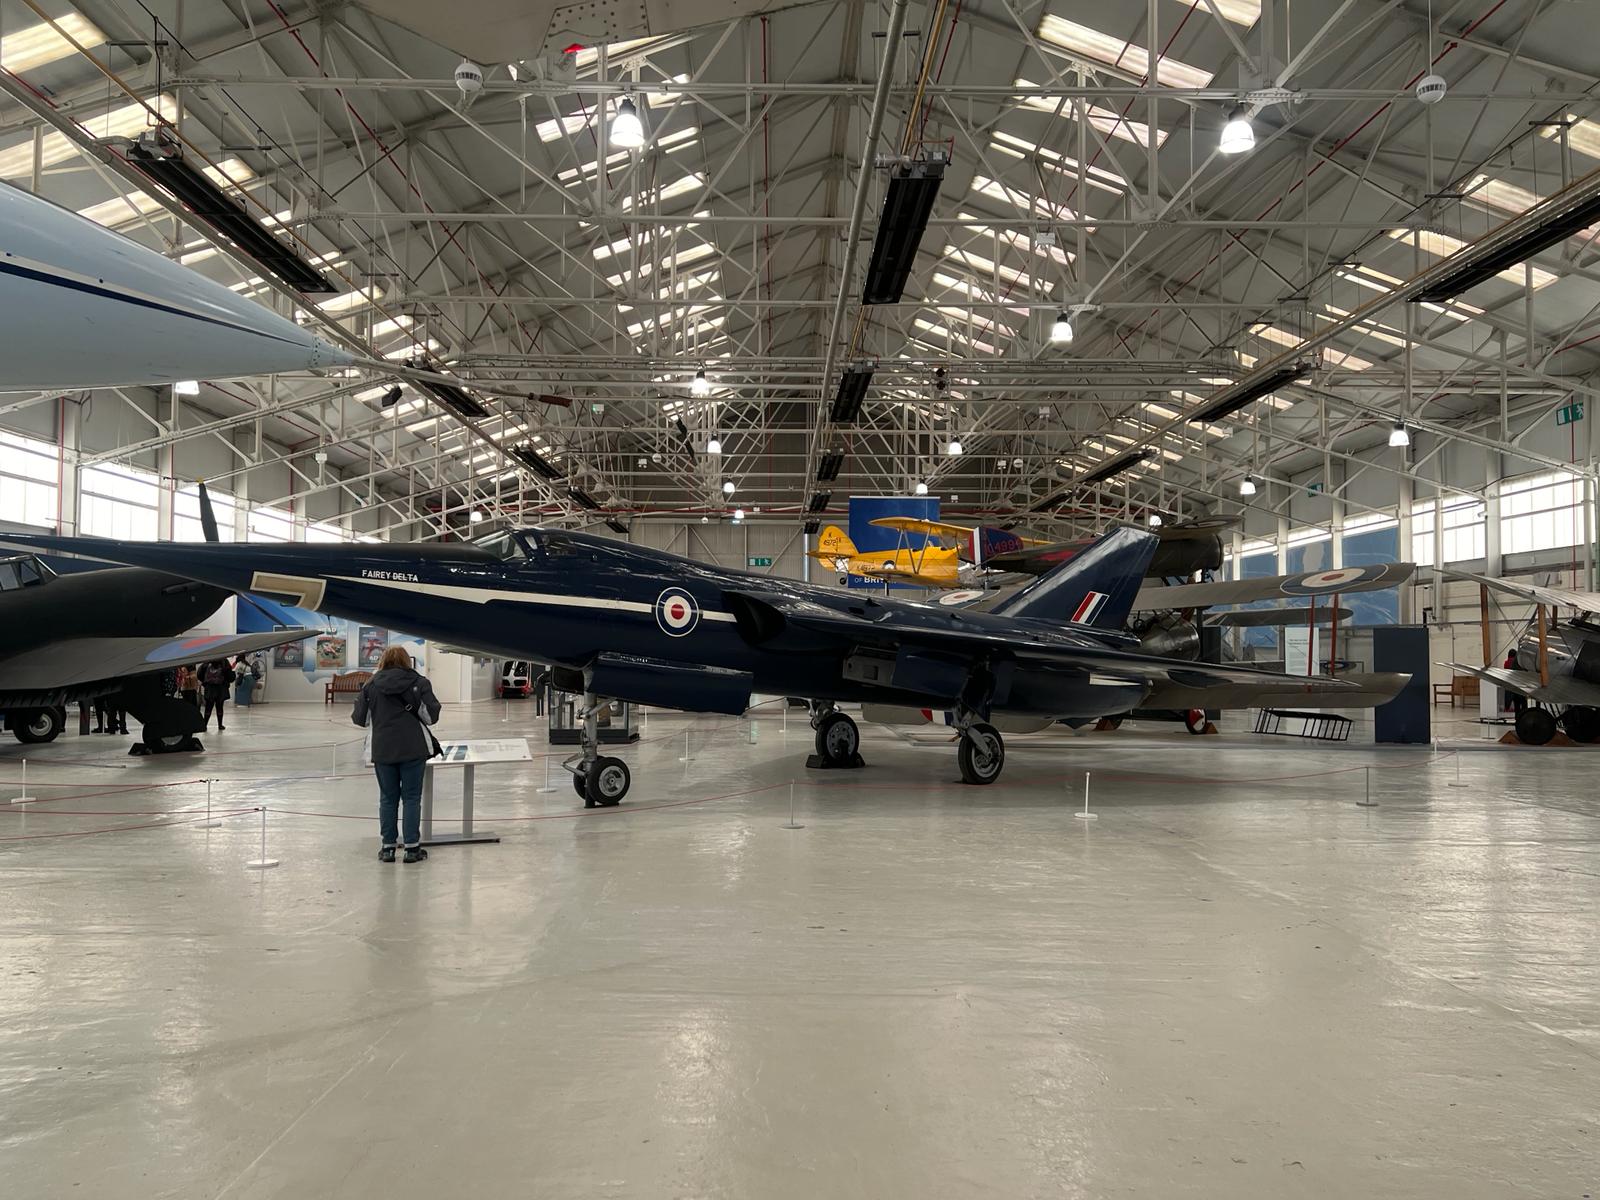 RAF Cosford aircraft museum